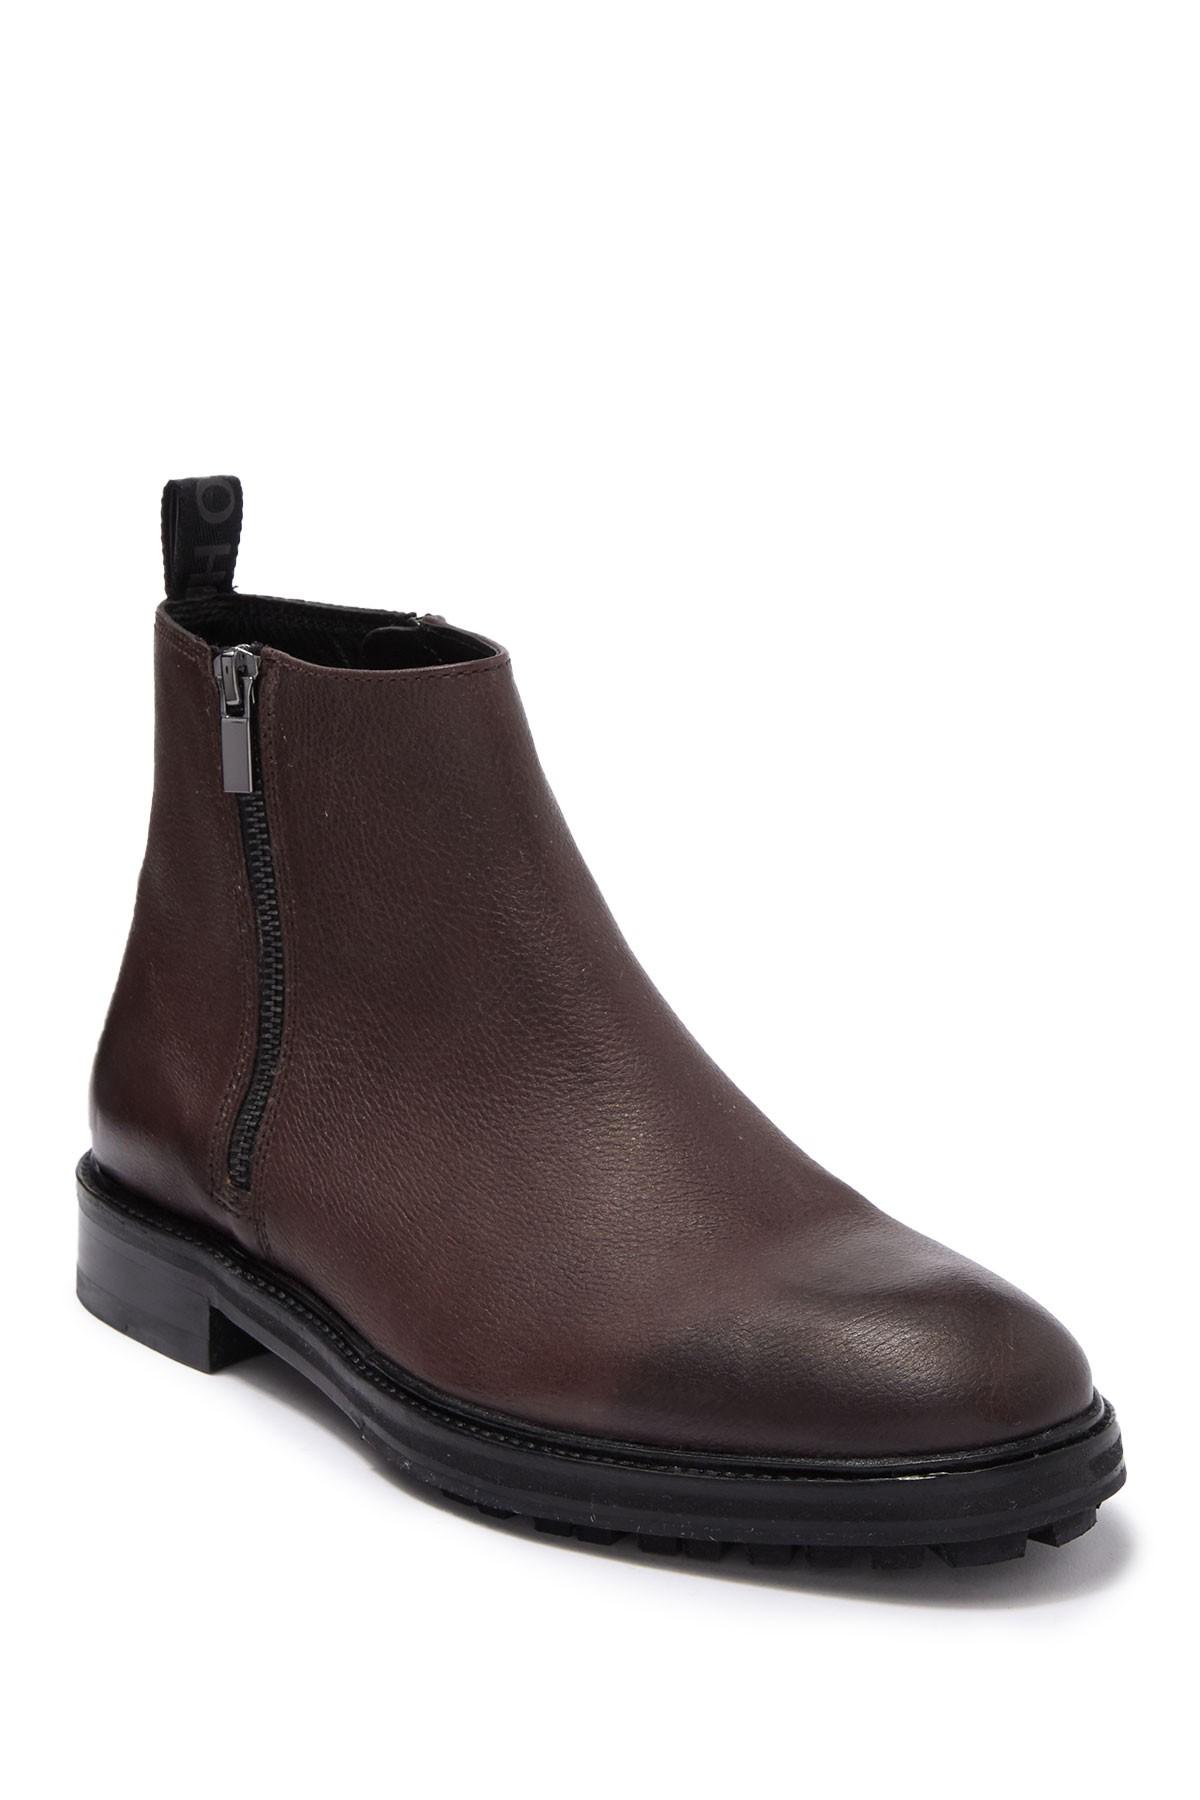 HUGO Leather Bohemian Zip Boot in Dark Brown (Brown) for Men - Lyst